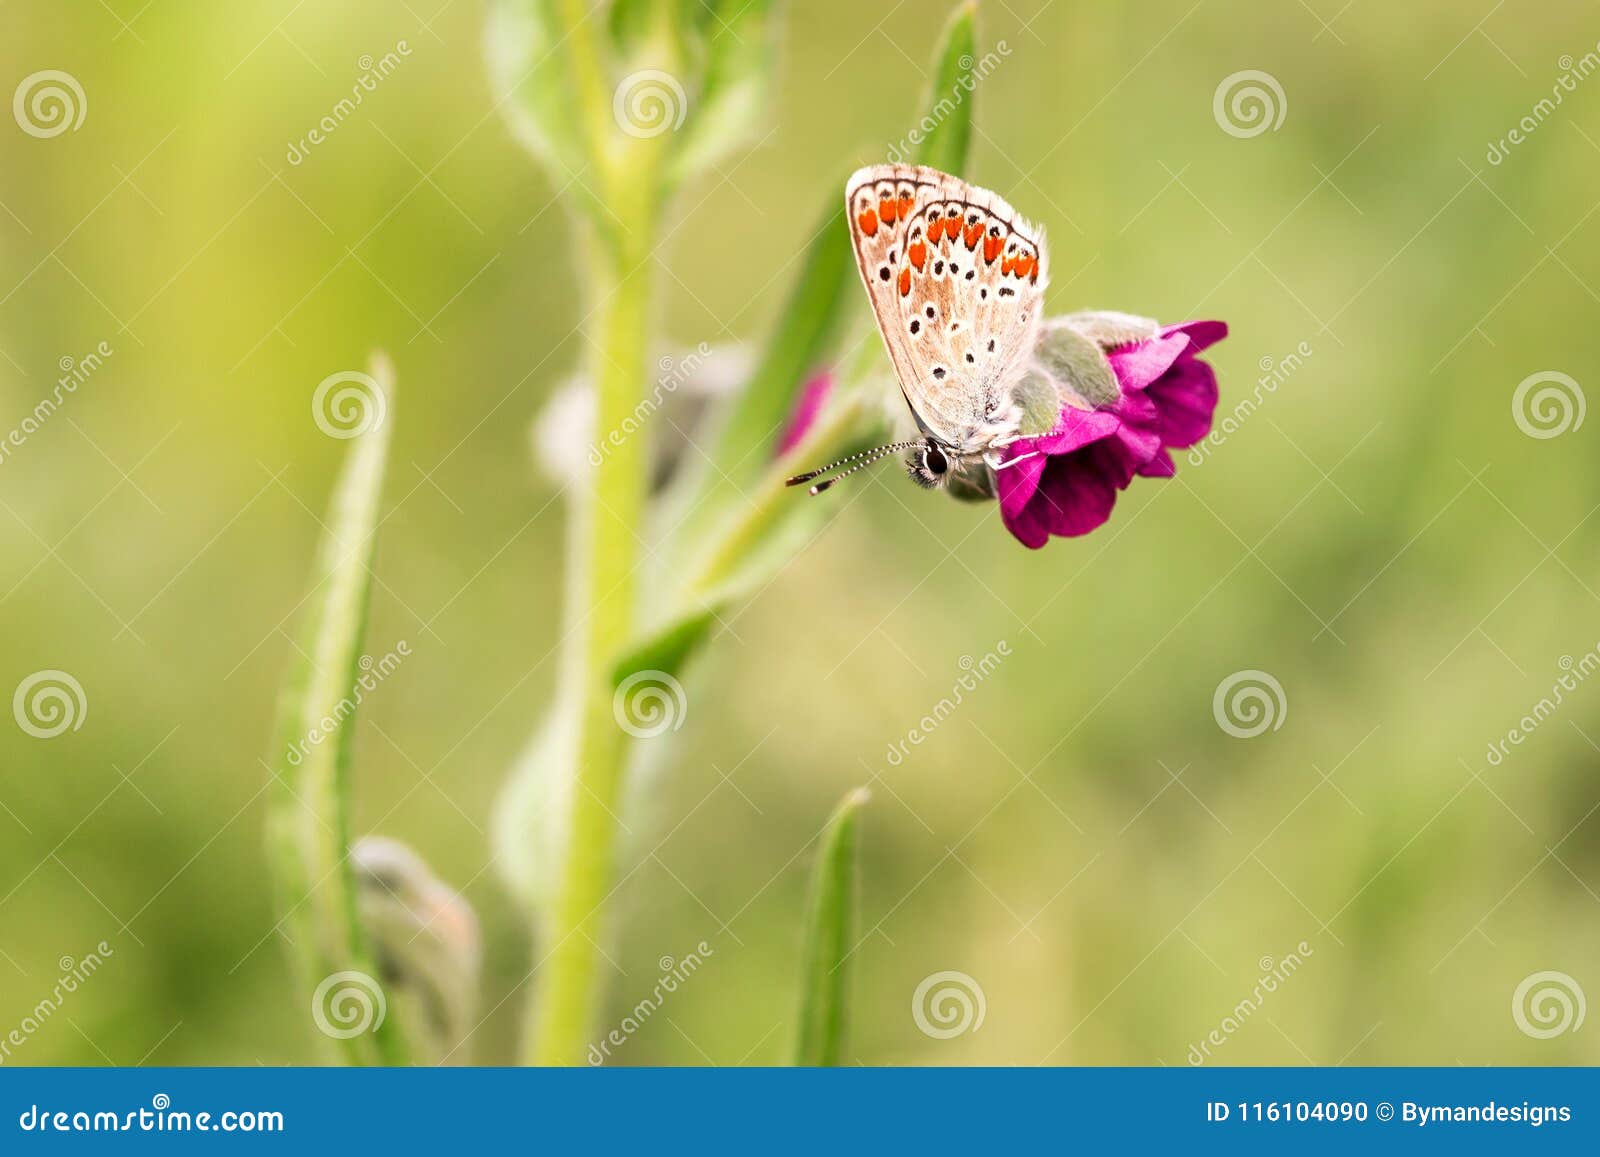 cupido argiades butterflies in nature macro shot